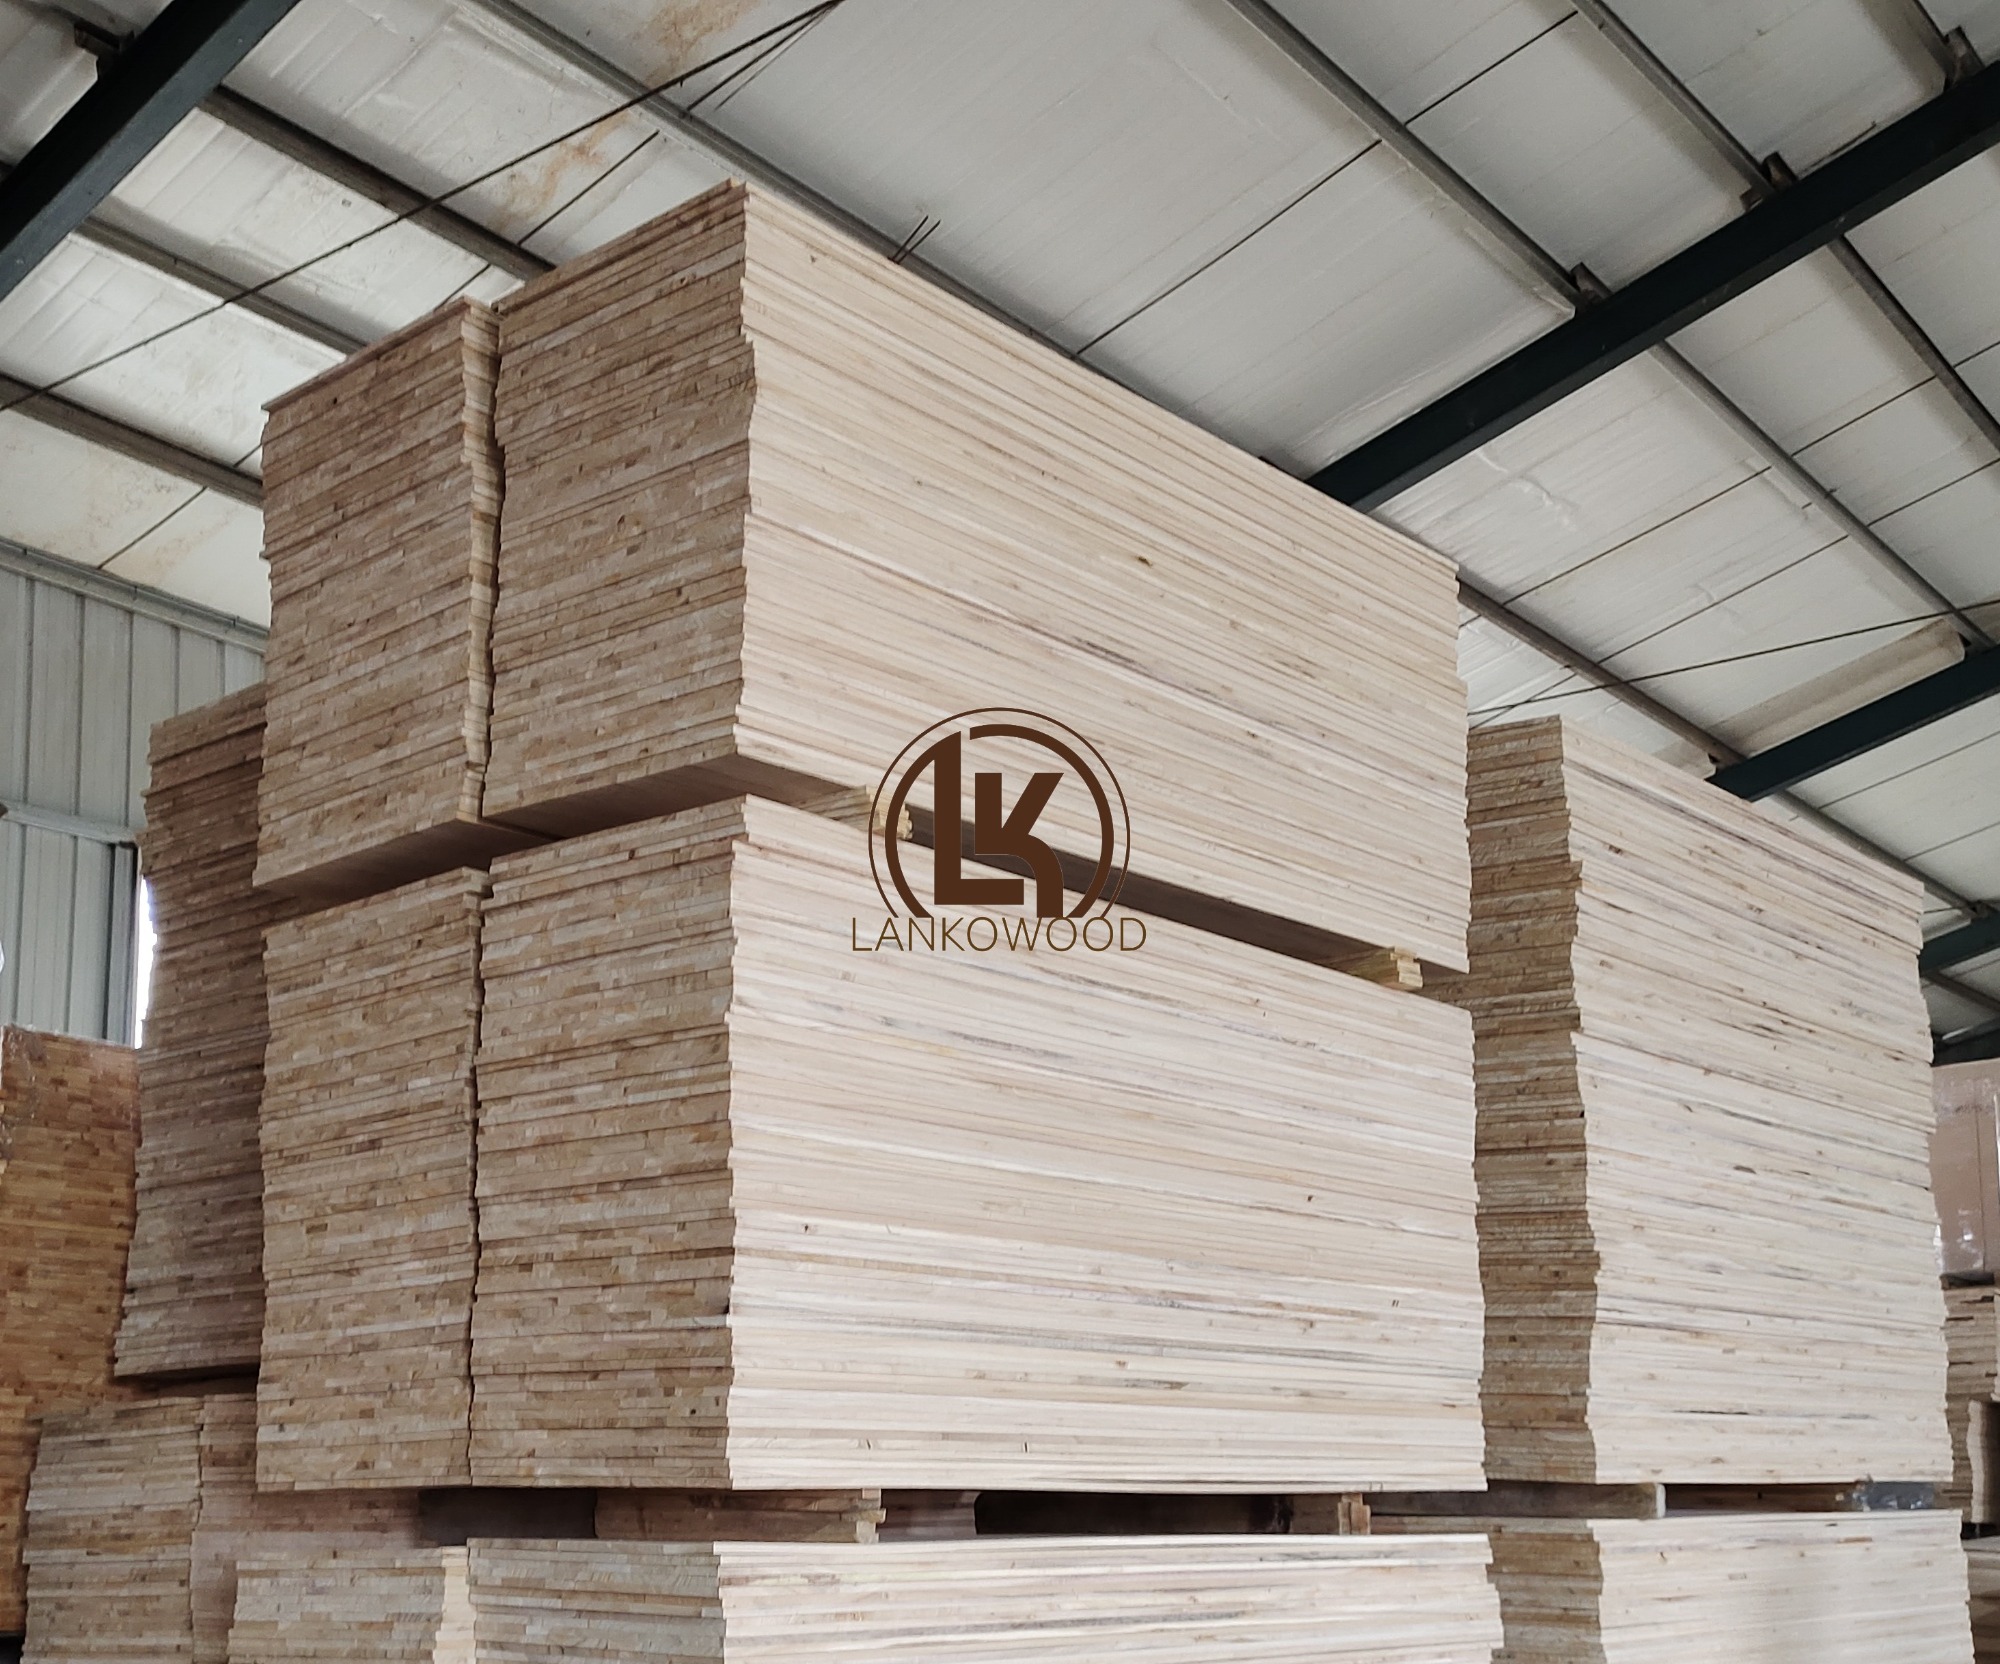 Moisture 8%-13% LVL Plank Pine LVL for Home Decoration for Packing - China  LVL Laminated Veneer Lumber, Pine LVL